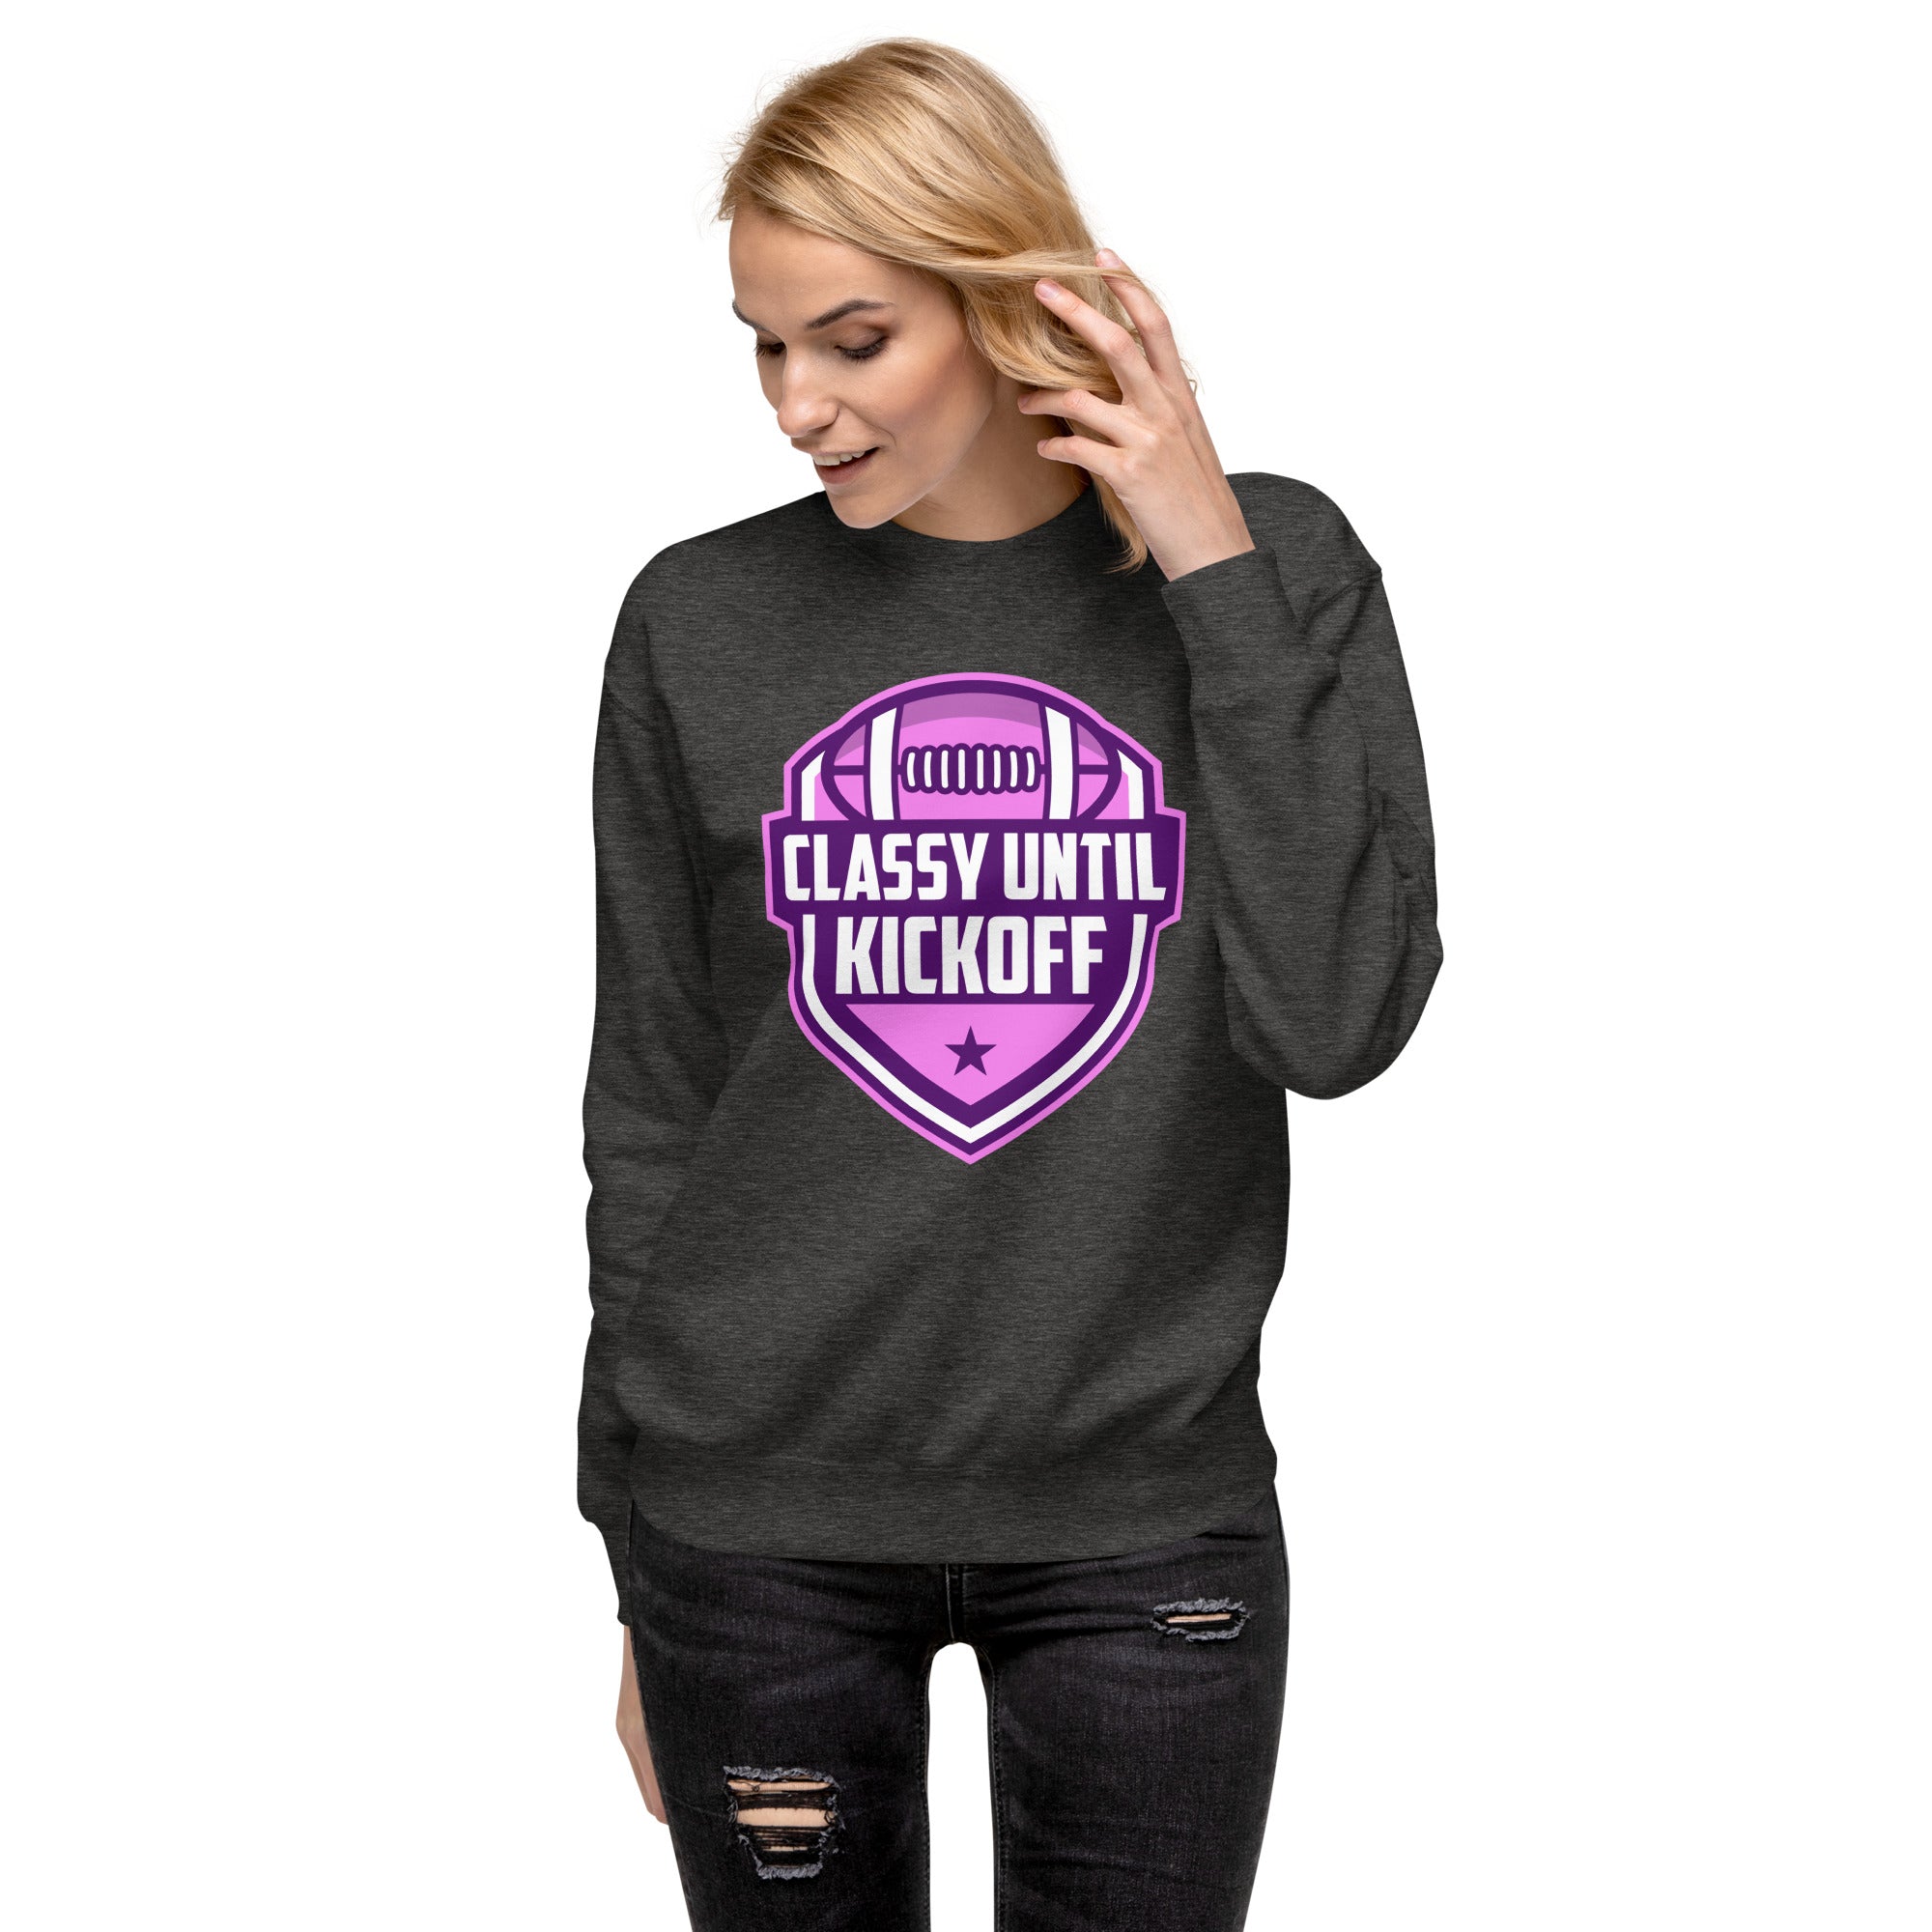 Classy Until KickOff Premium Women's Sweatshirt